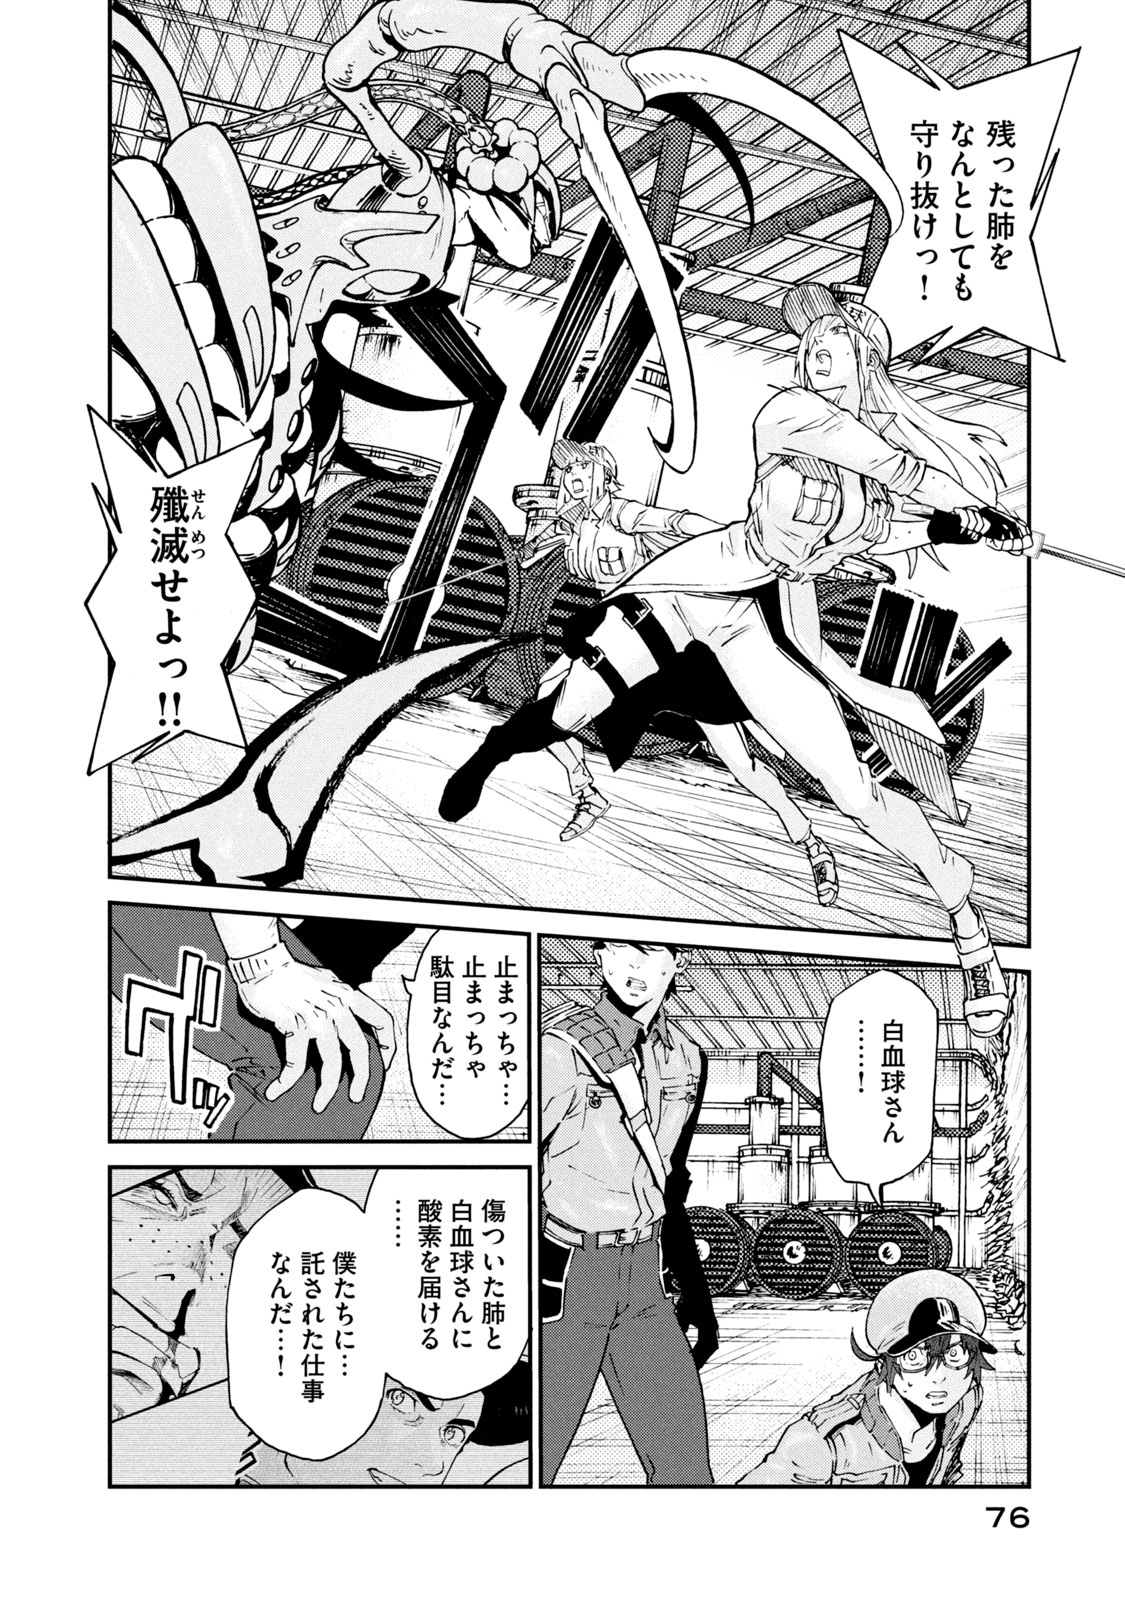 Hataraku Saibou BLACK - Chapter 39 - Page 14